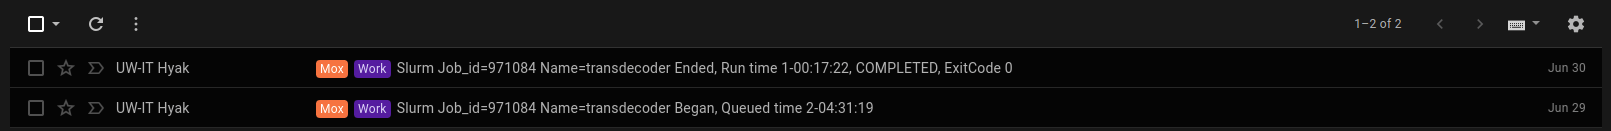 Screencap of Mox Transdecoder run time